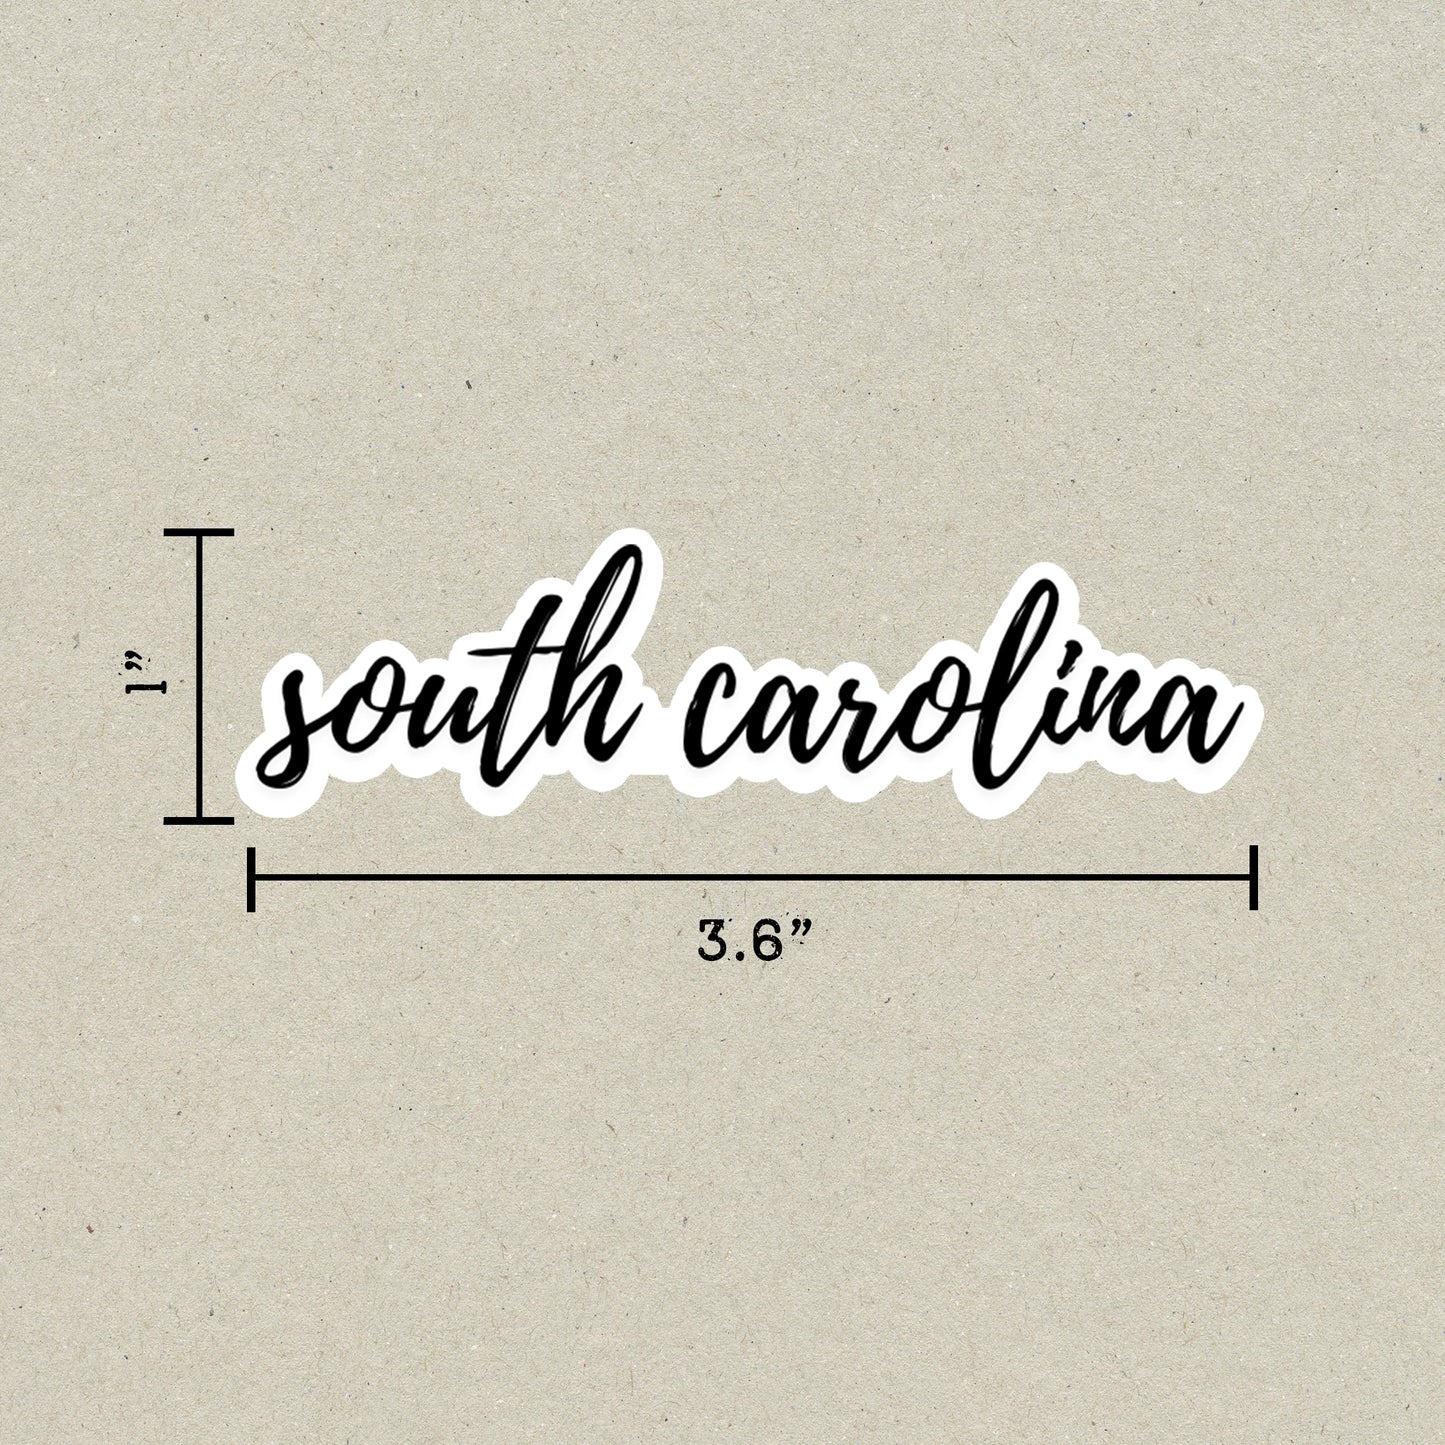 South Carolina Cursive Sticker